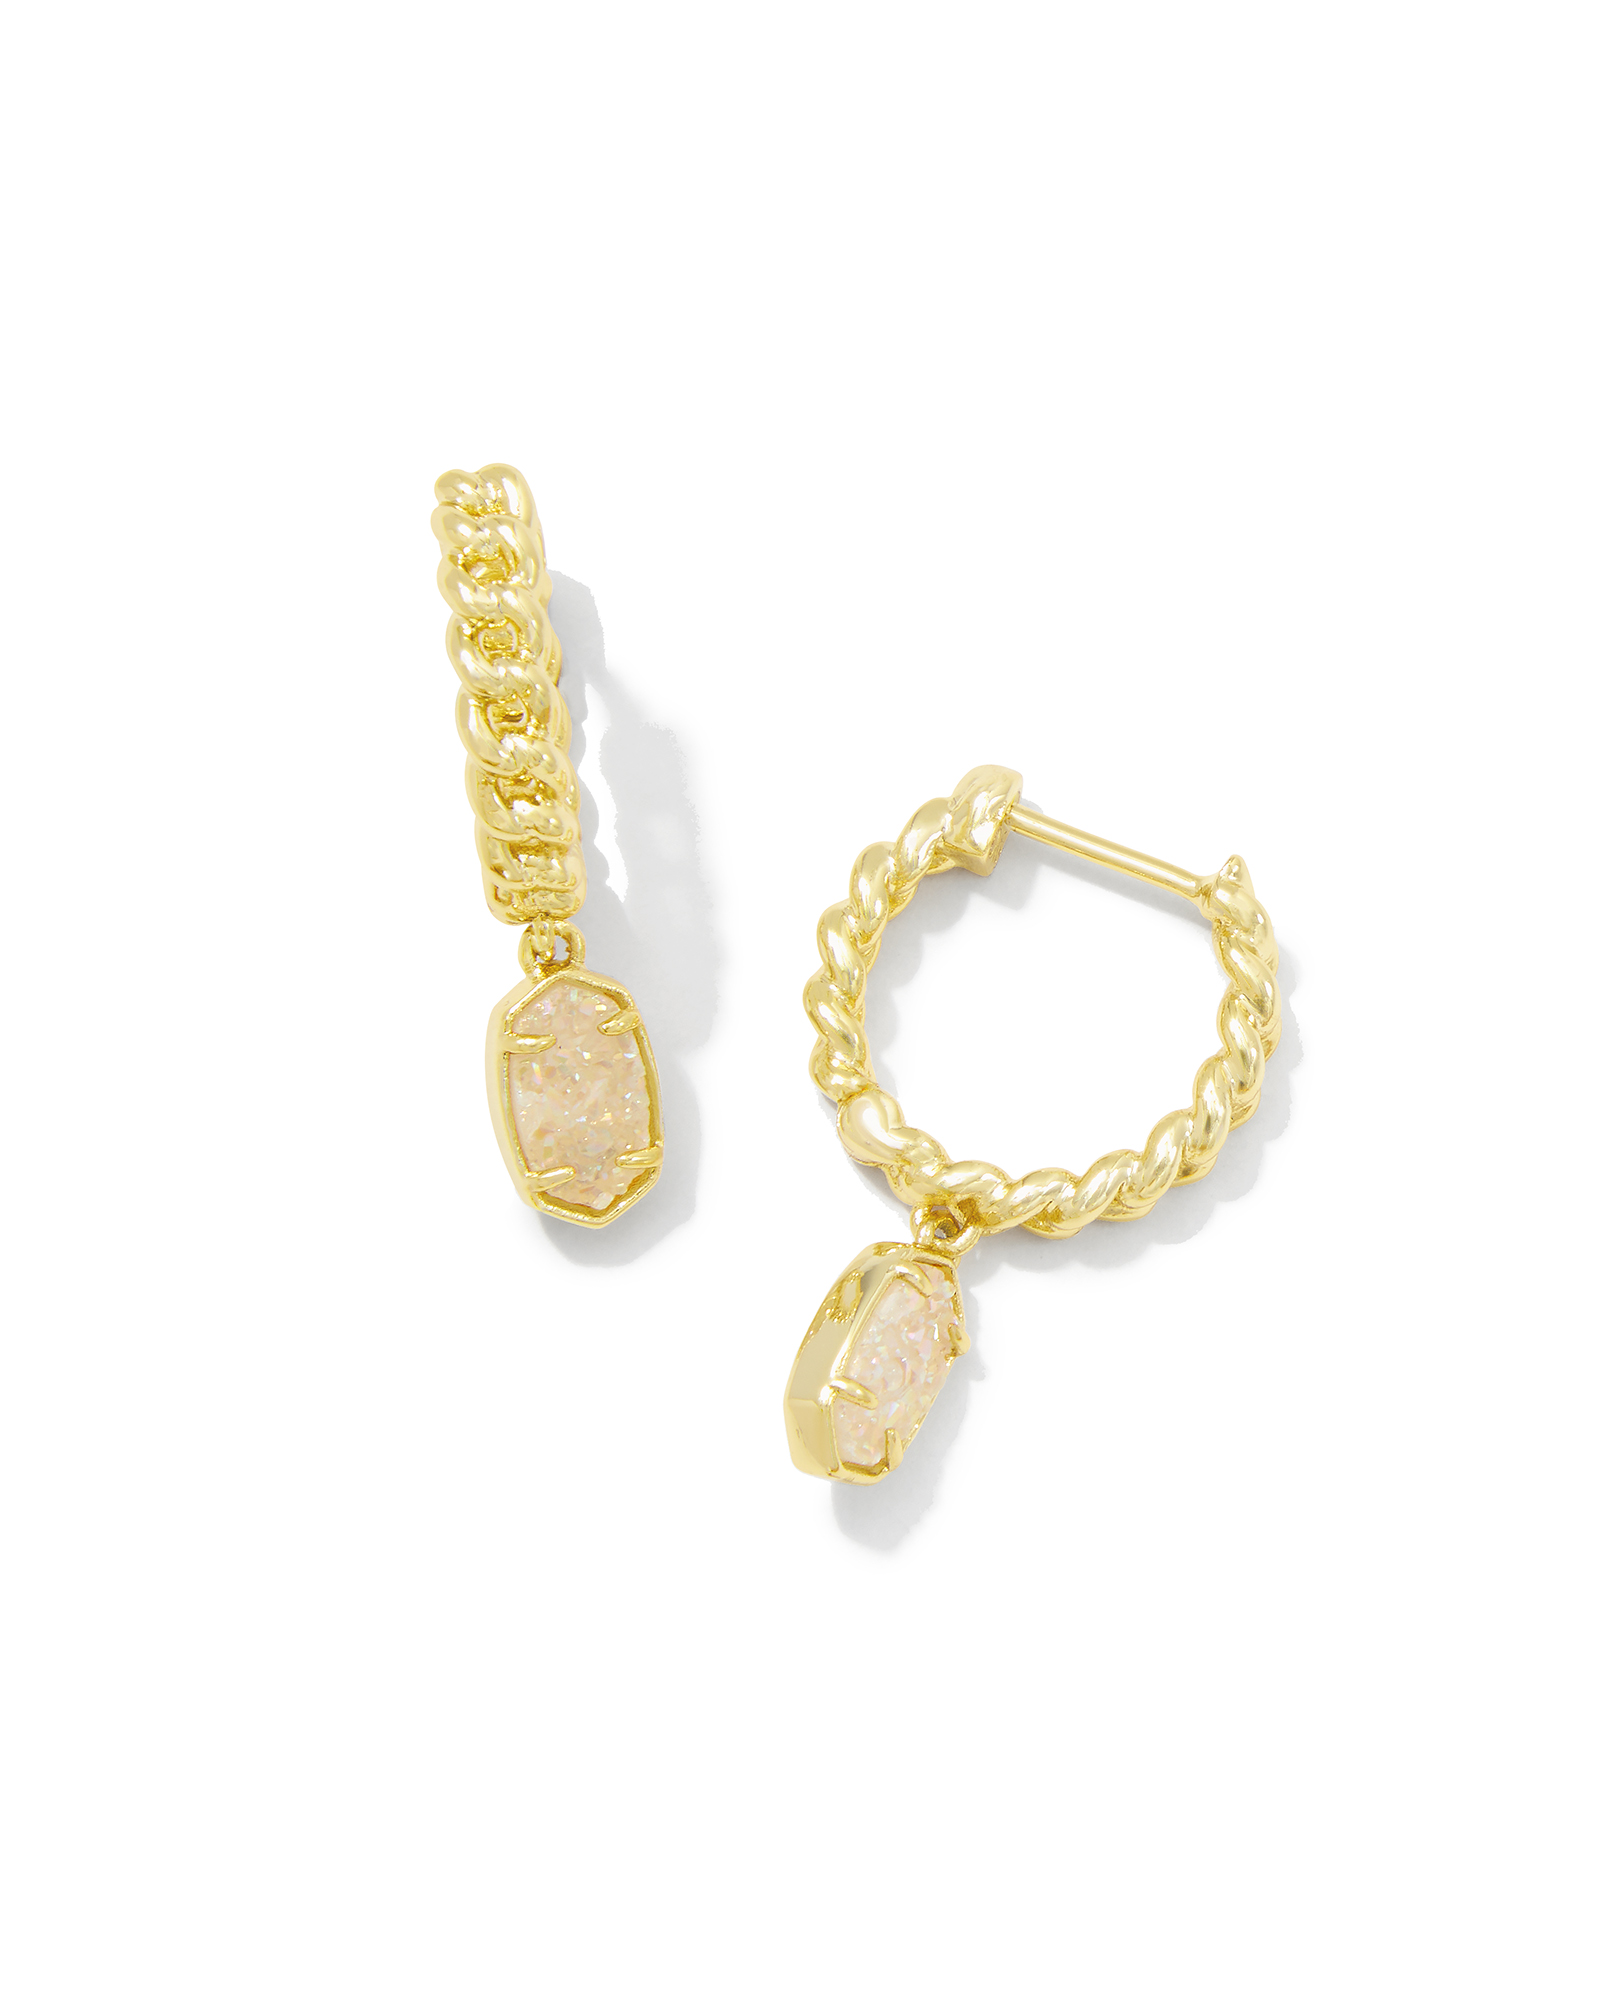 Emilie Gold Huggie Earrings in Iridescent Drusy | Kendra Scott